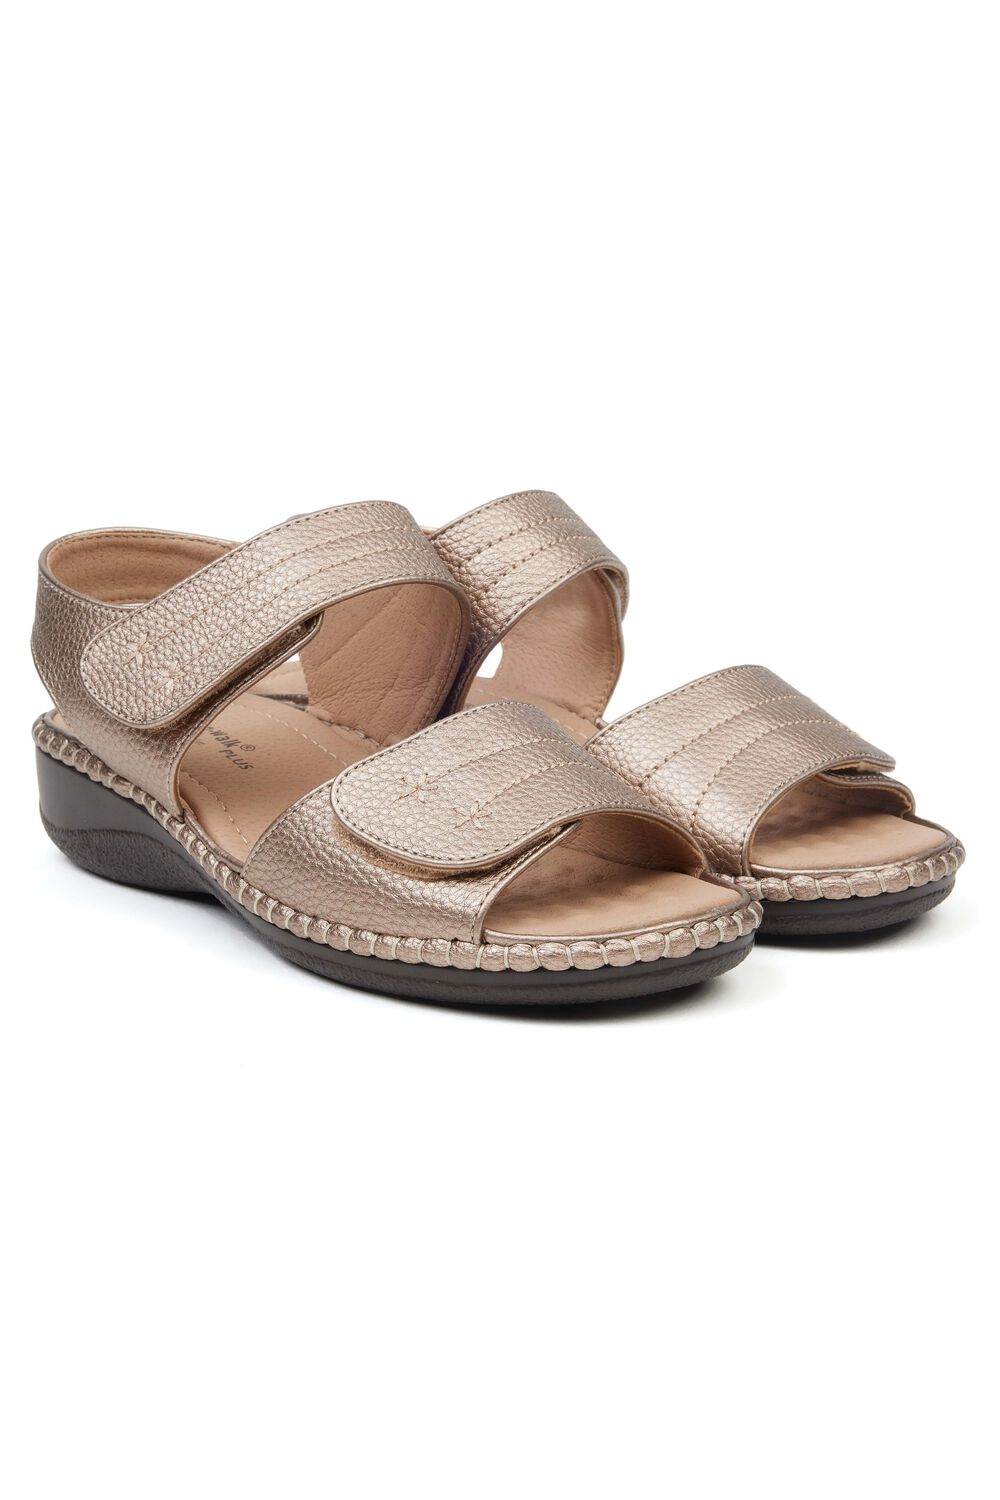 Bonmarche Bronze Metallic Adjustable Sandals With Stitch Detail (eee Fit), Size: 3